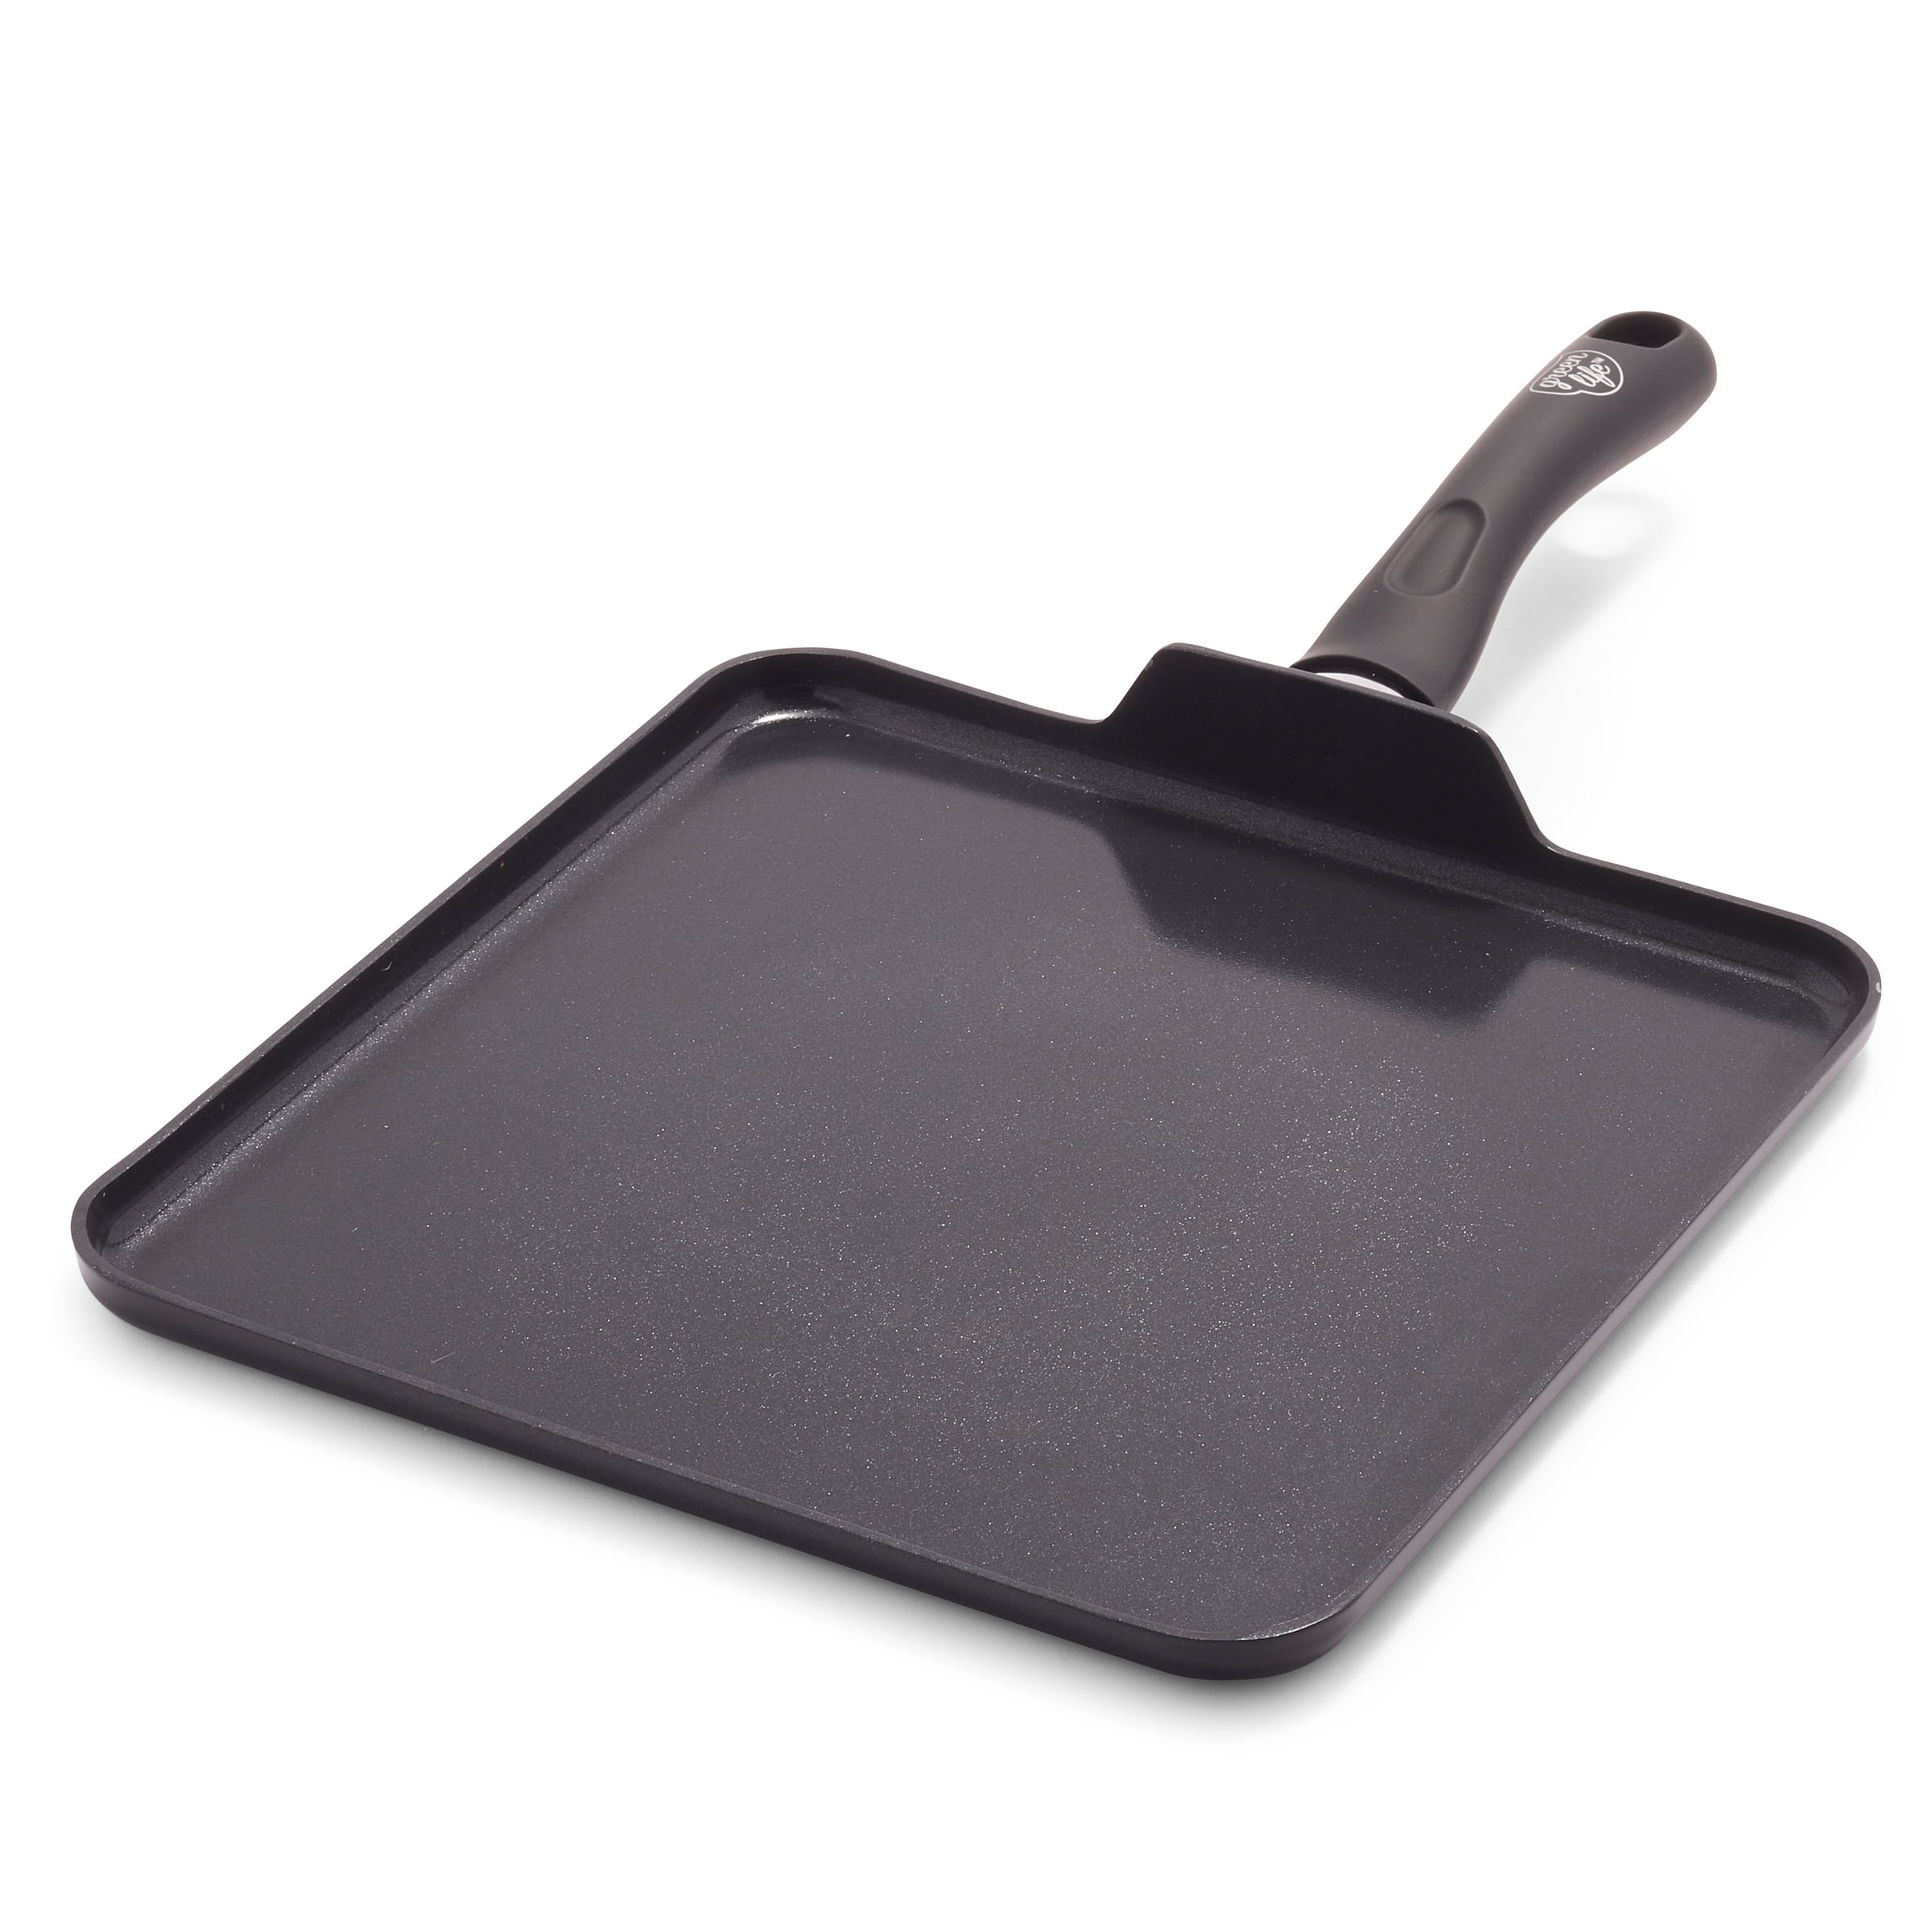 Details about   3-Piece Nonstick Frying Grill Griddle Pans Fry Dishwasher Safe Kitchen Pan Set 